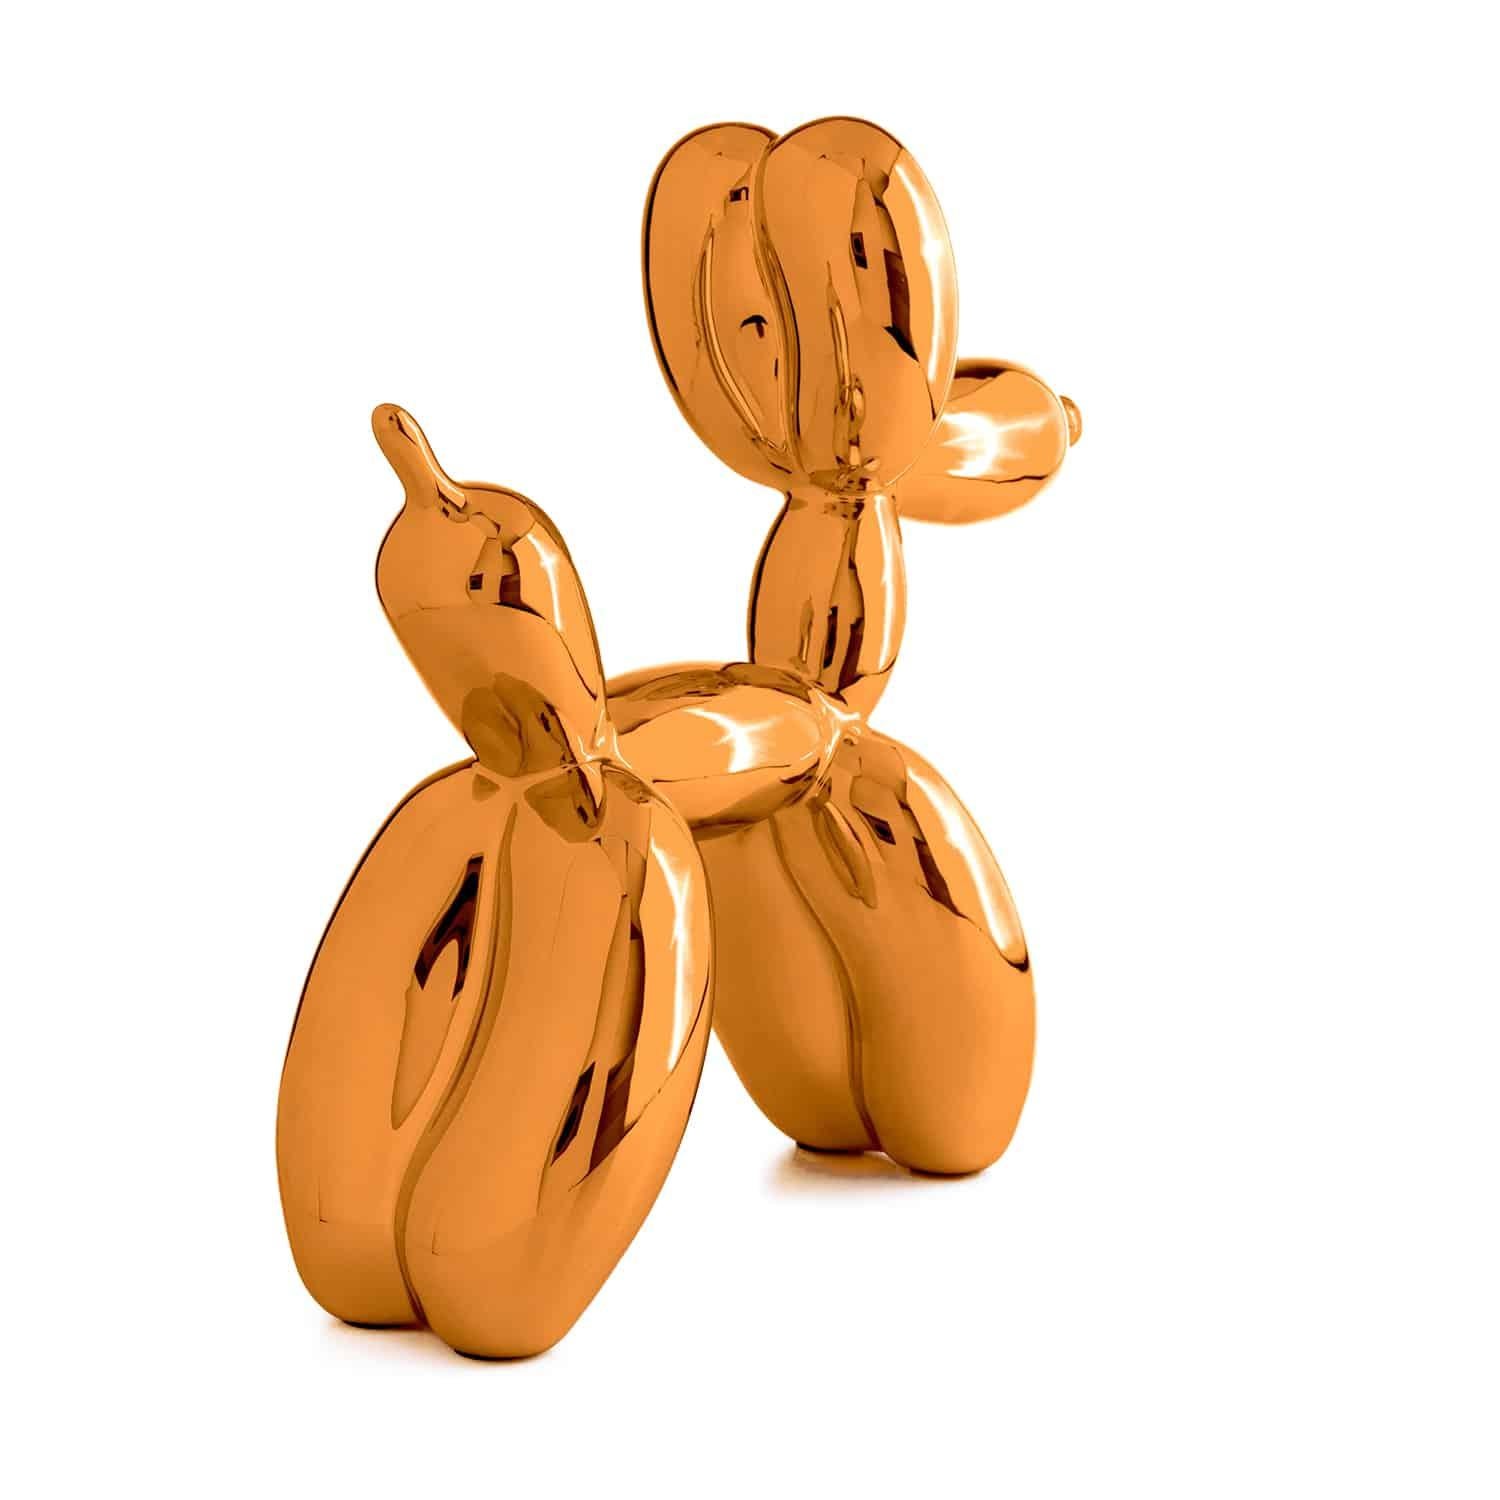 Balloon Dog ( After )  - Orange - Pop Art Sculpture by After Jeff Koons